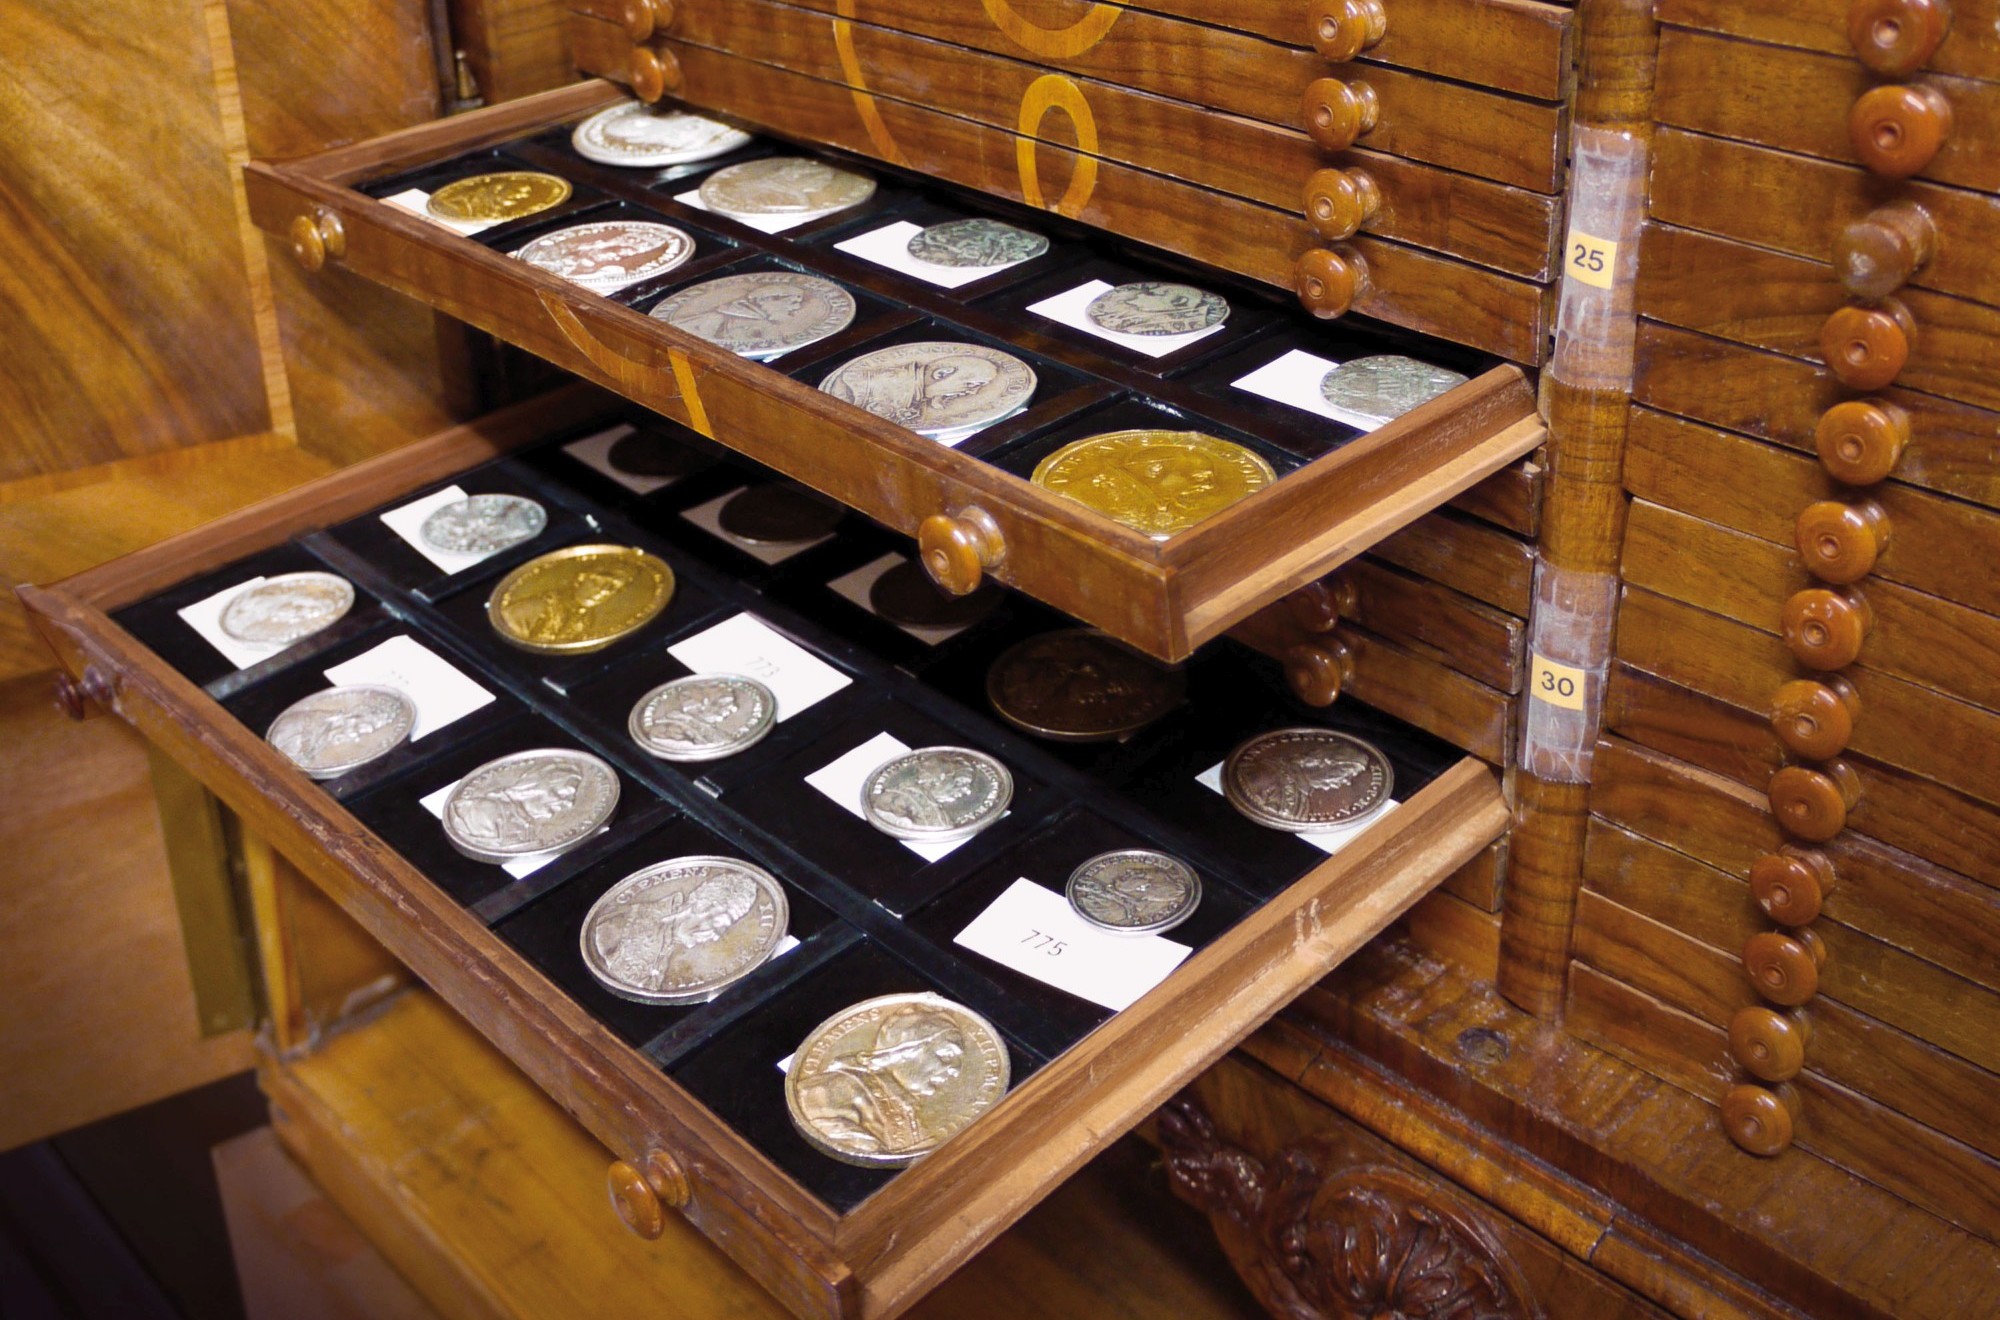 August Voit von Salzburg coin collection in the historic coin cabinet (Image: Isi Kunath)